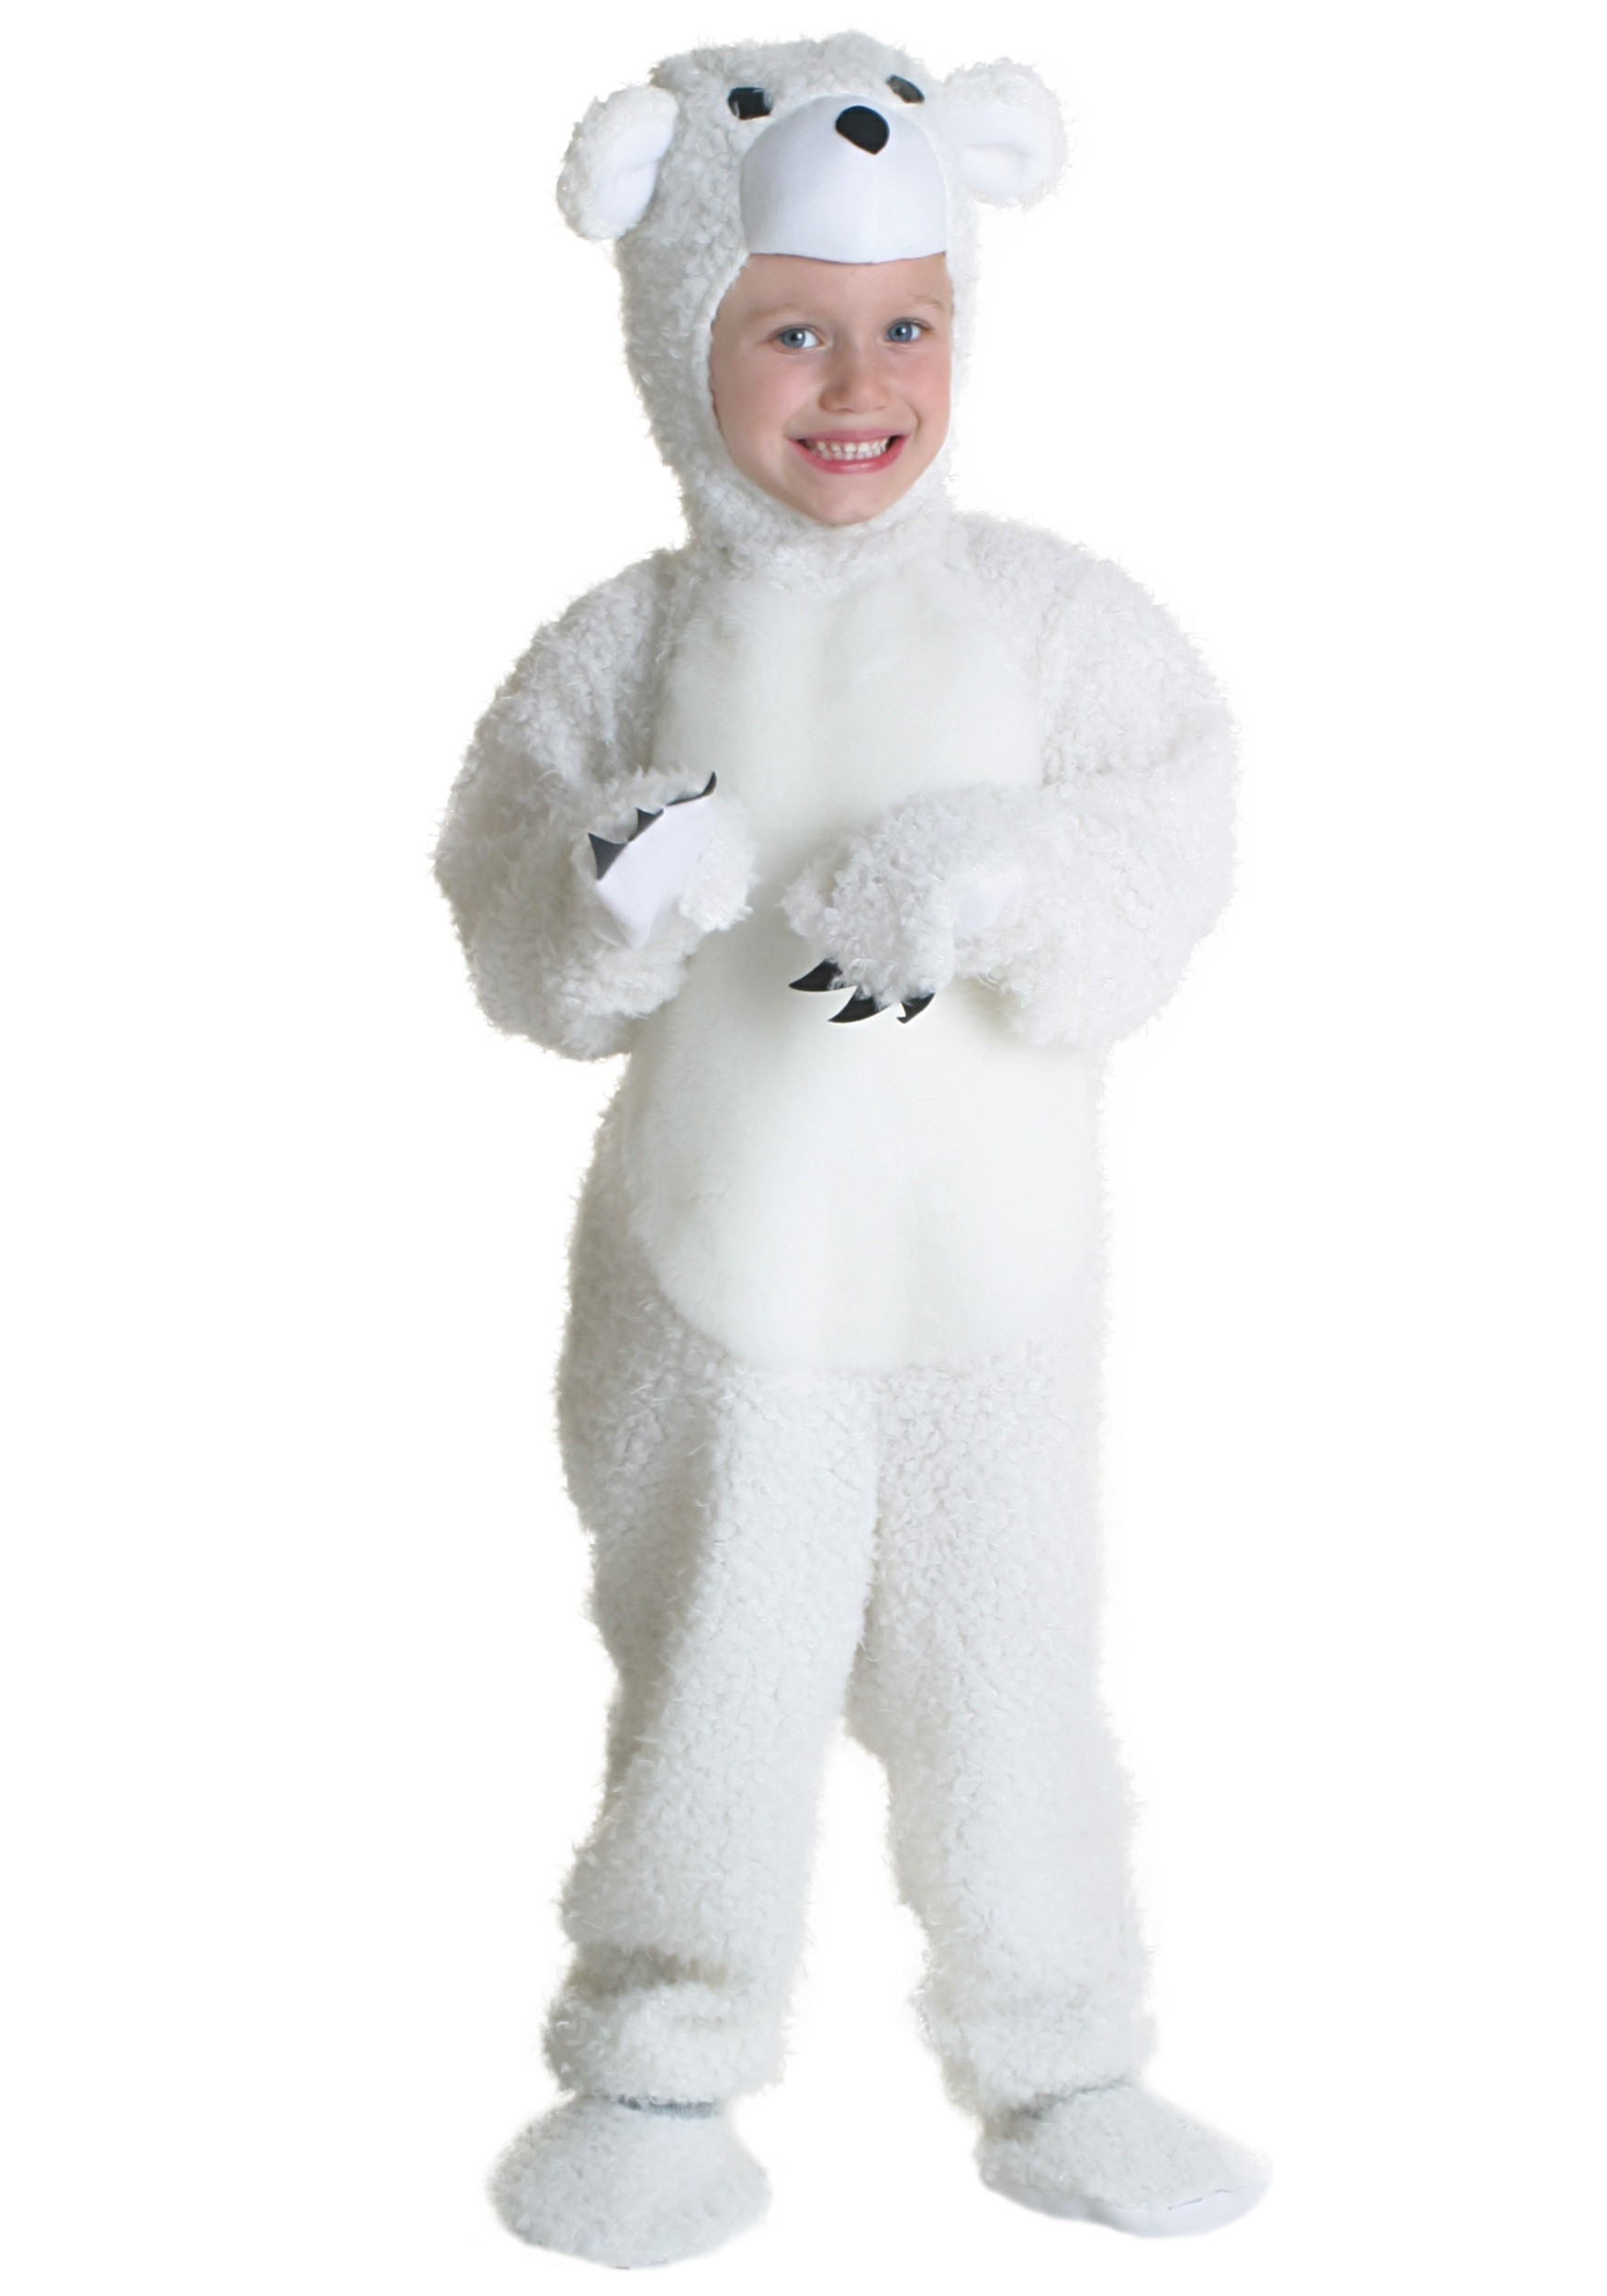 Best ideas about Polar Bear Costume DIY
. Save or Pin Toddler Polar Bear Costume Now.